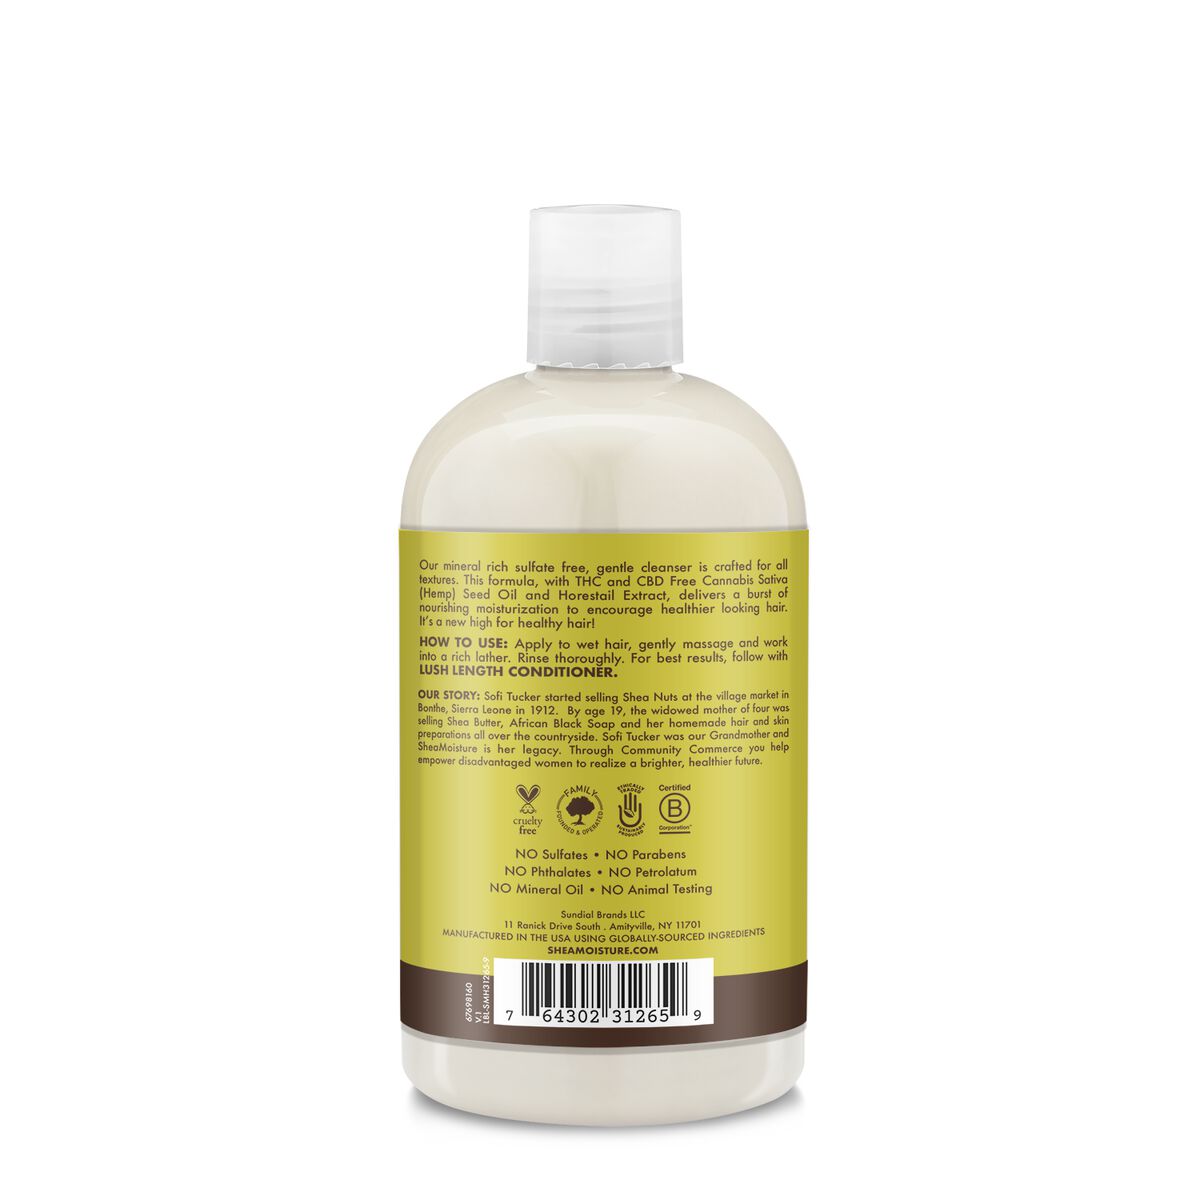 Shea Moisture Cannabis Sativa (Hemp) Seed Oil Lush Length Shampoo (384 ml) Shea Moisture